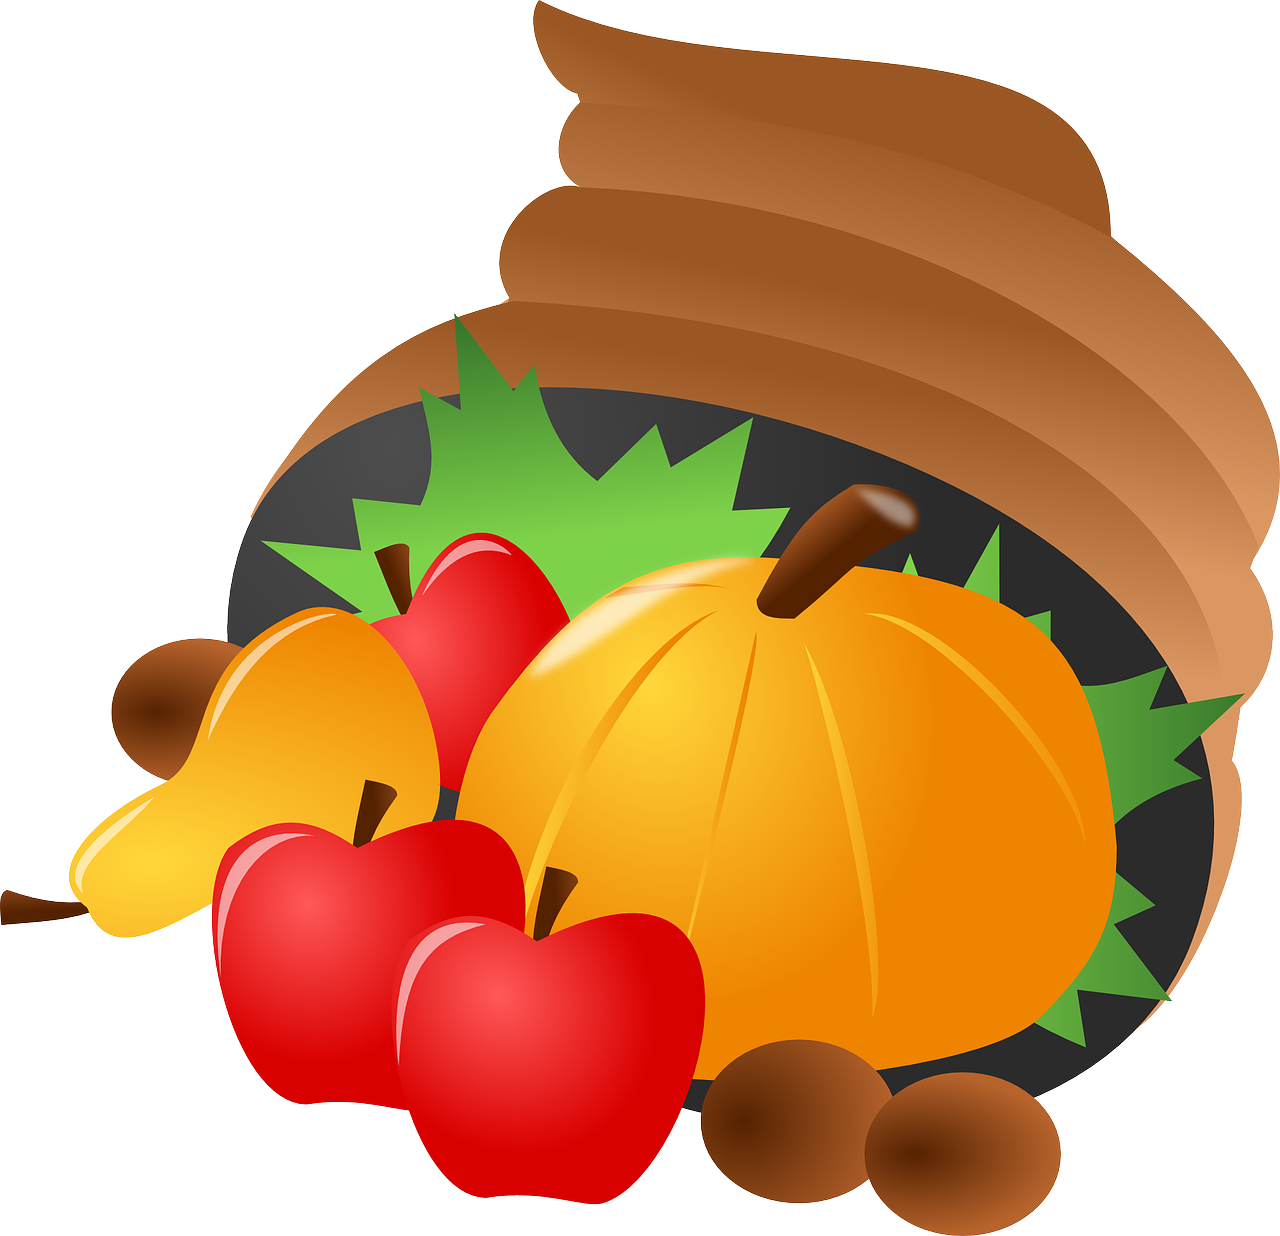 harvest basket with pumpkins and apples